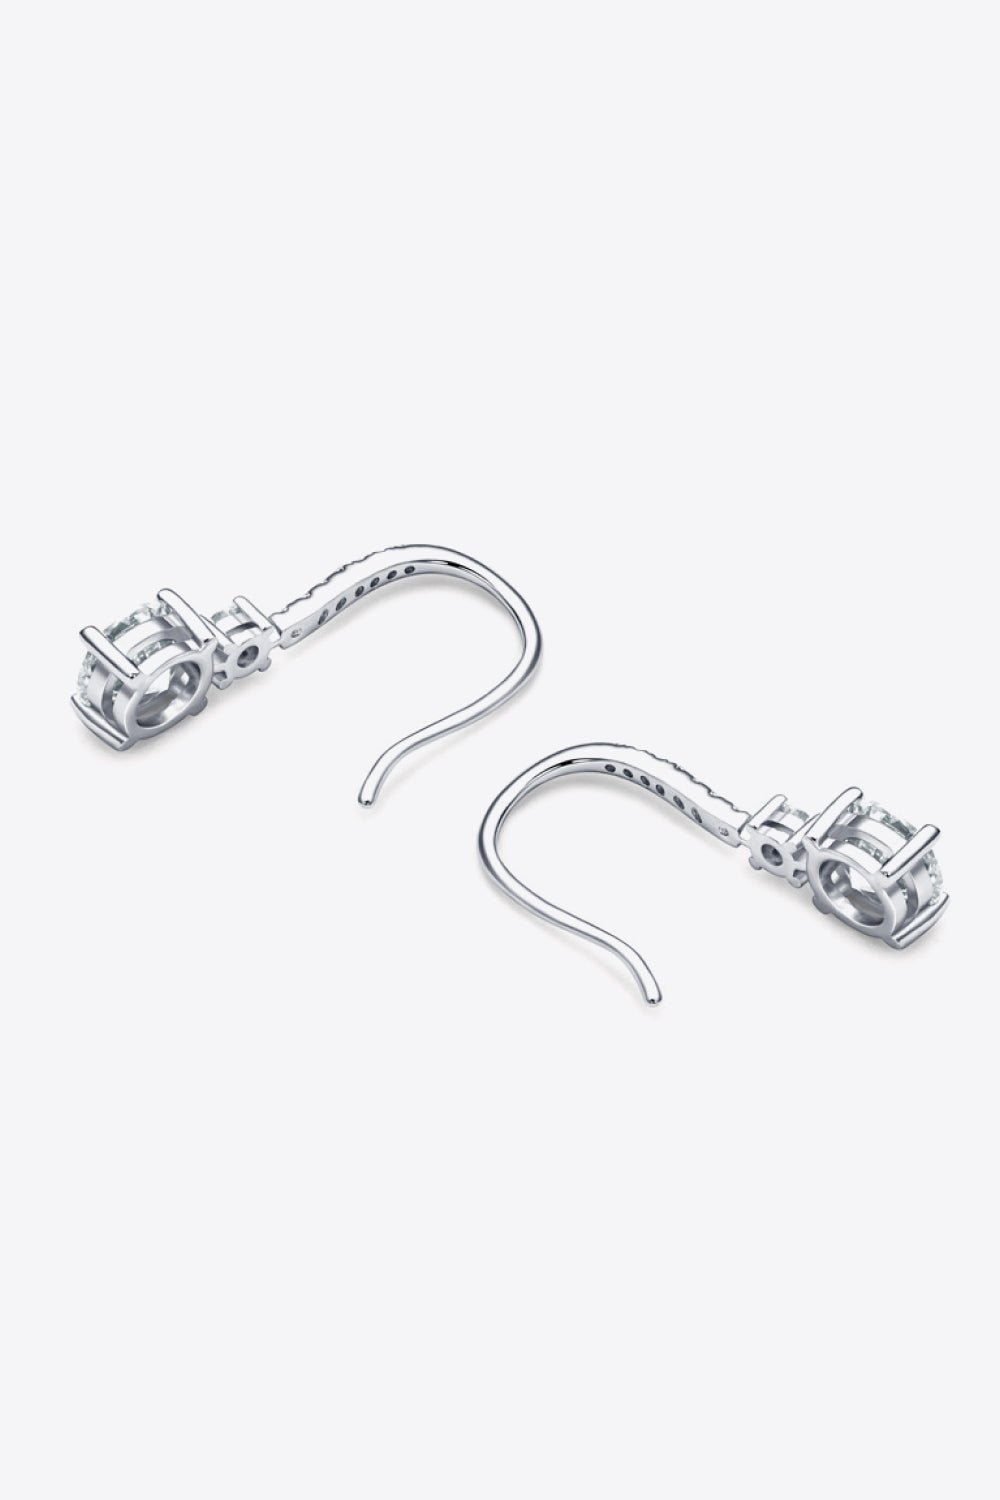 2 Carat Moissanite 925 Sterling Silver Drop Earrings - Uylee's Boutique